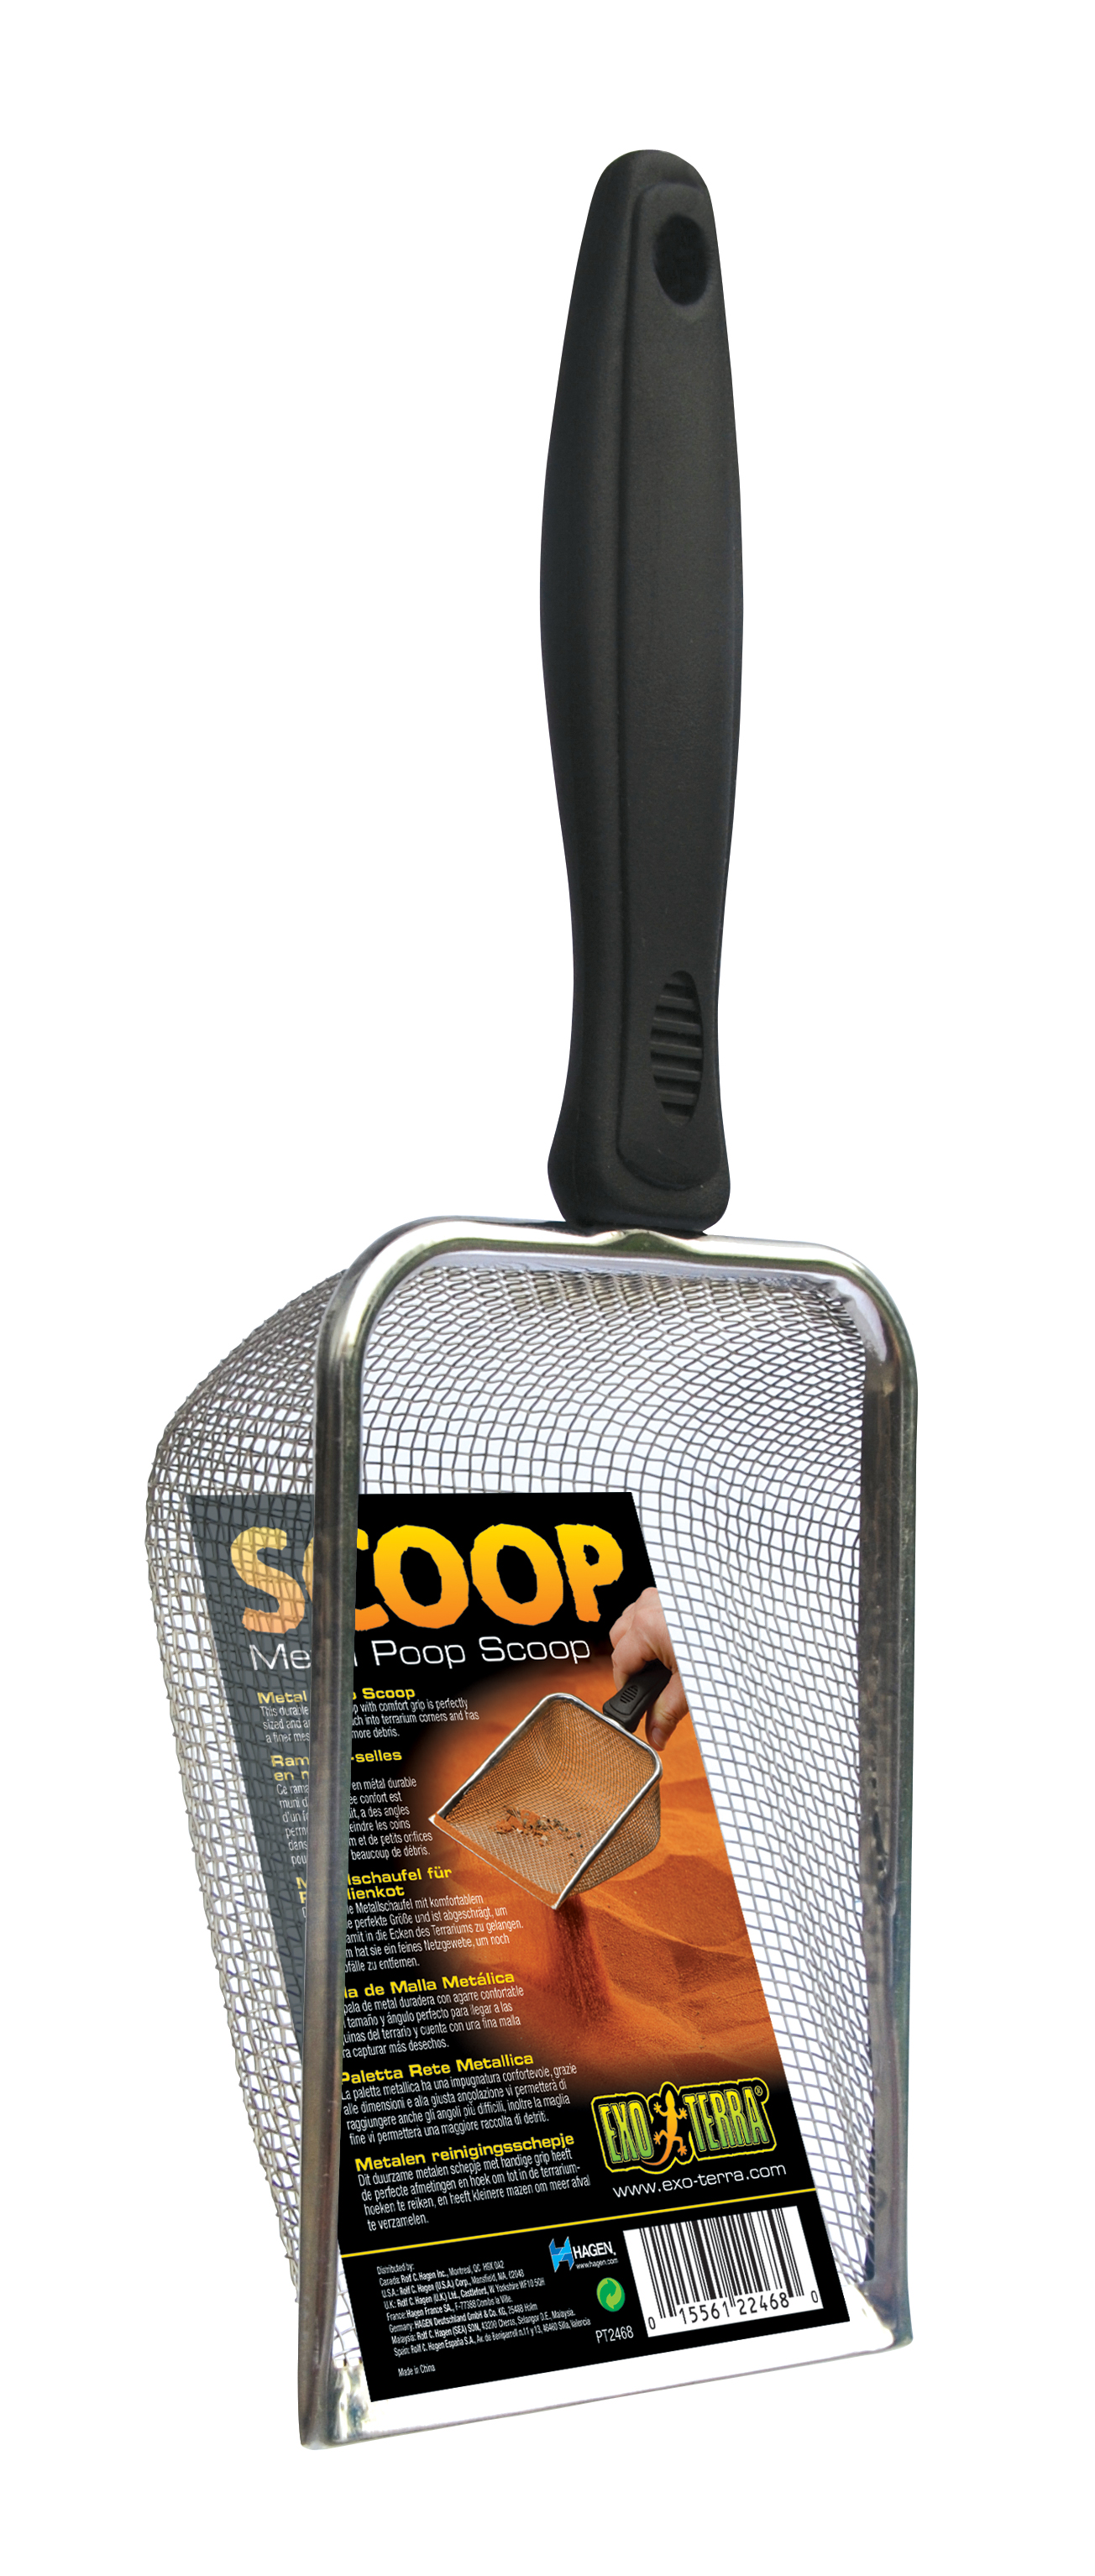 Ex metal poop scoop - Product shot